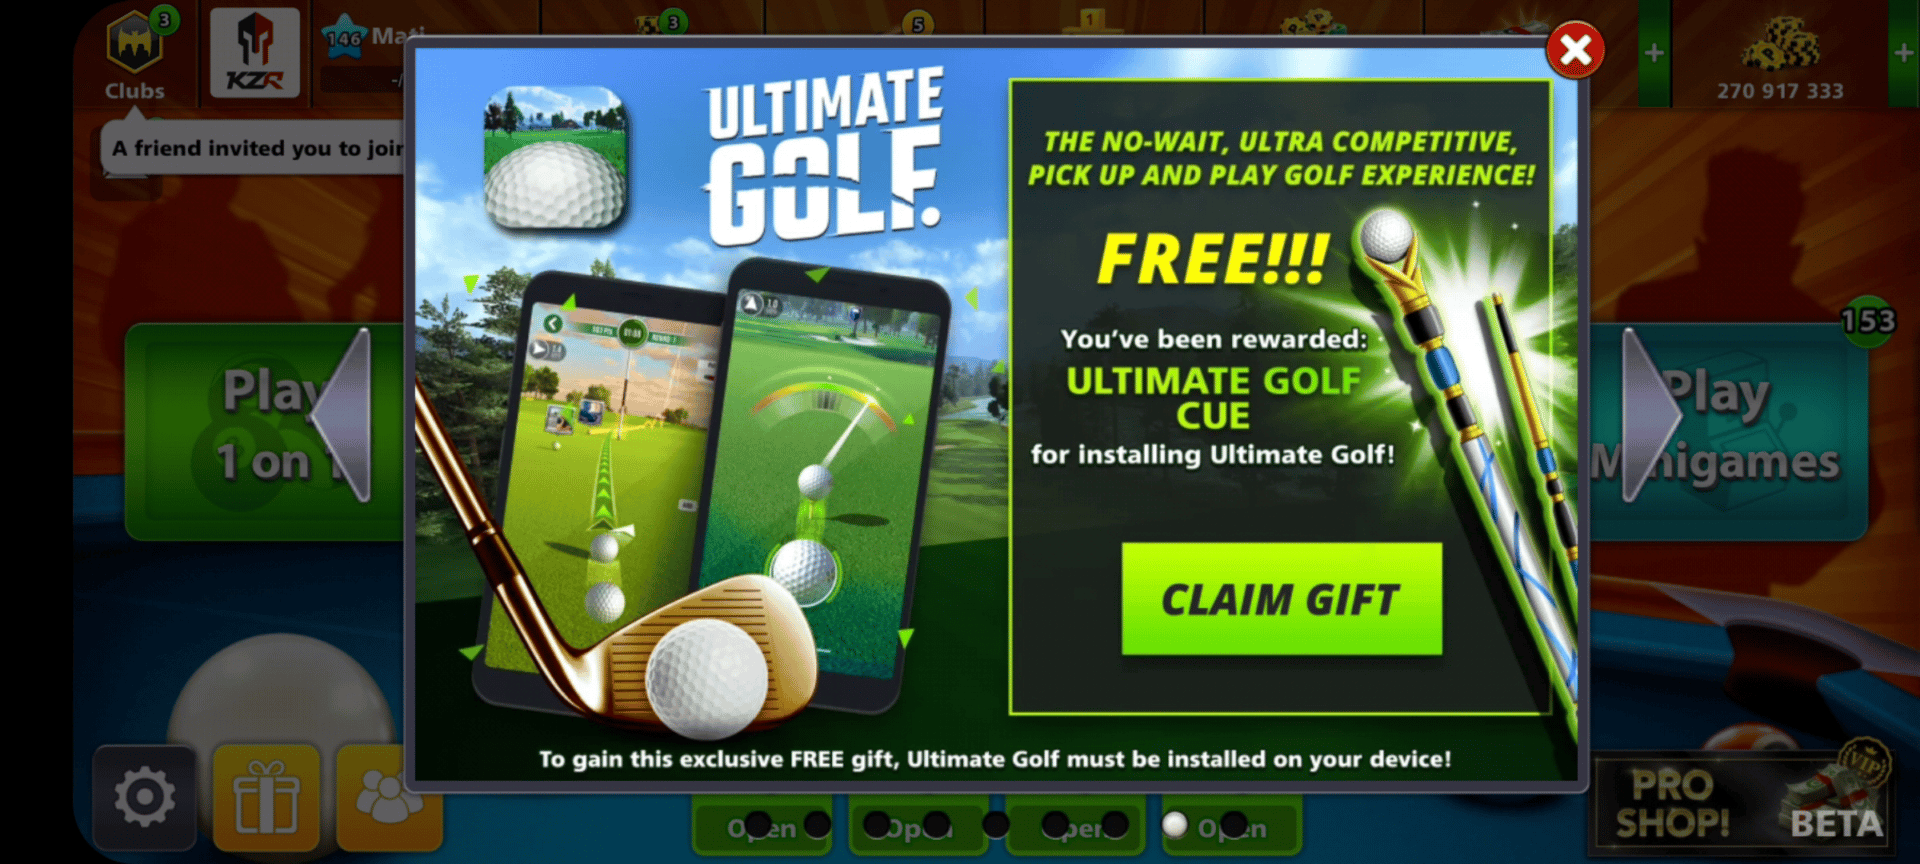 claim ultimate golf cue